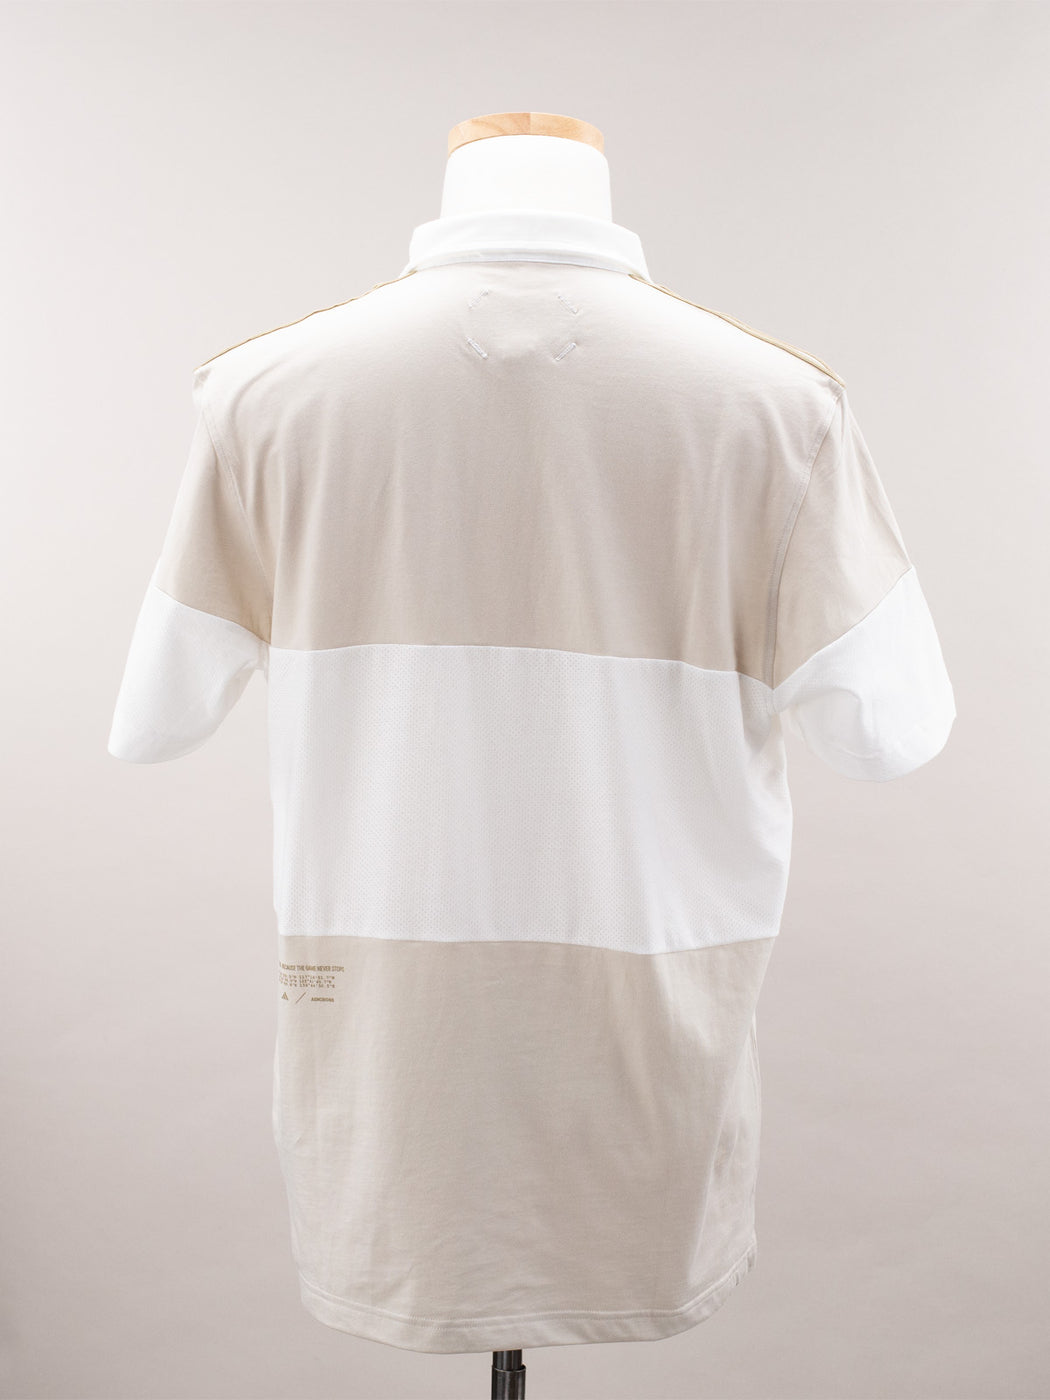 Adicross Golf Block Polo Shirt